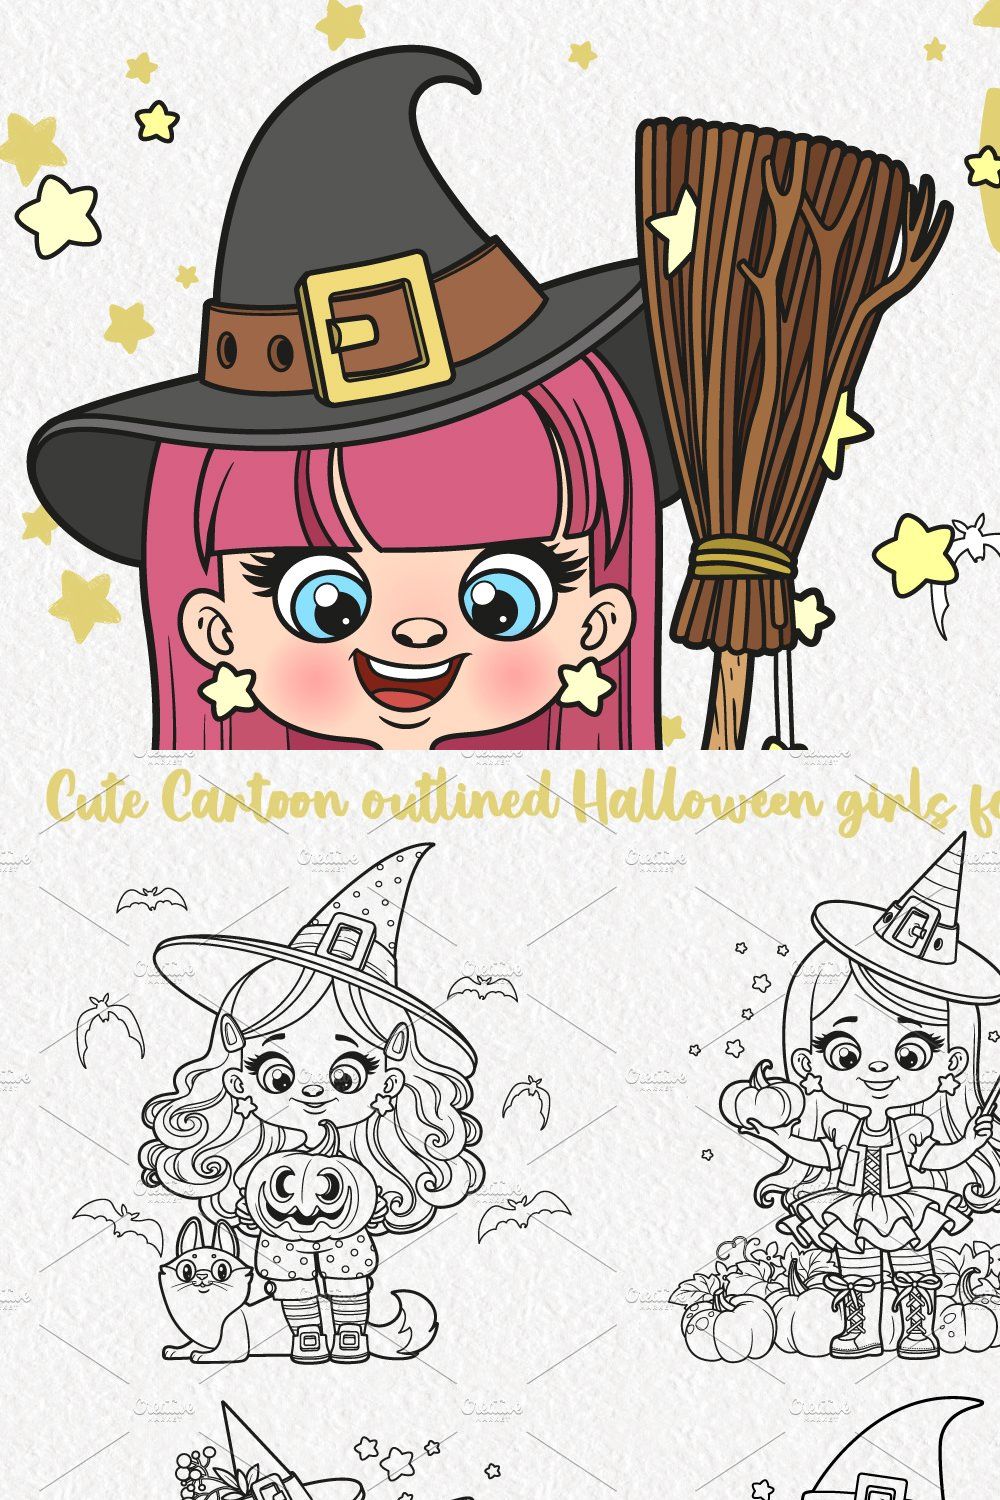 Cute cartoon Halloween witch girls pinterest preview image.